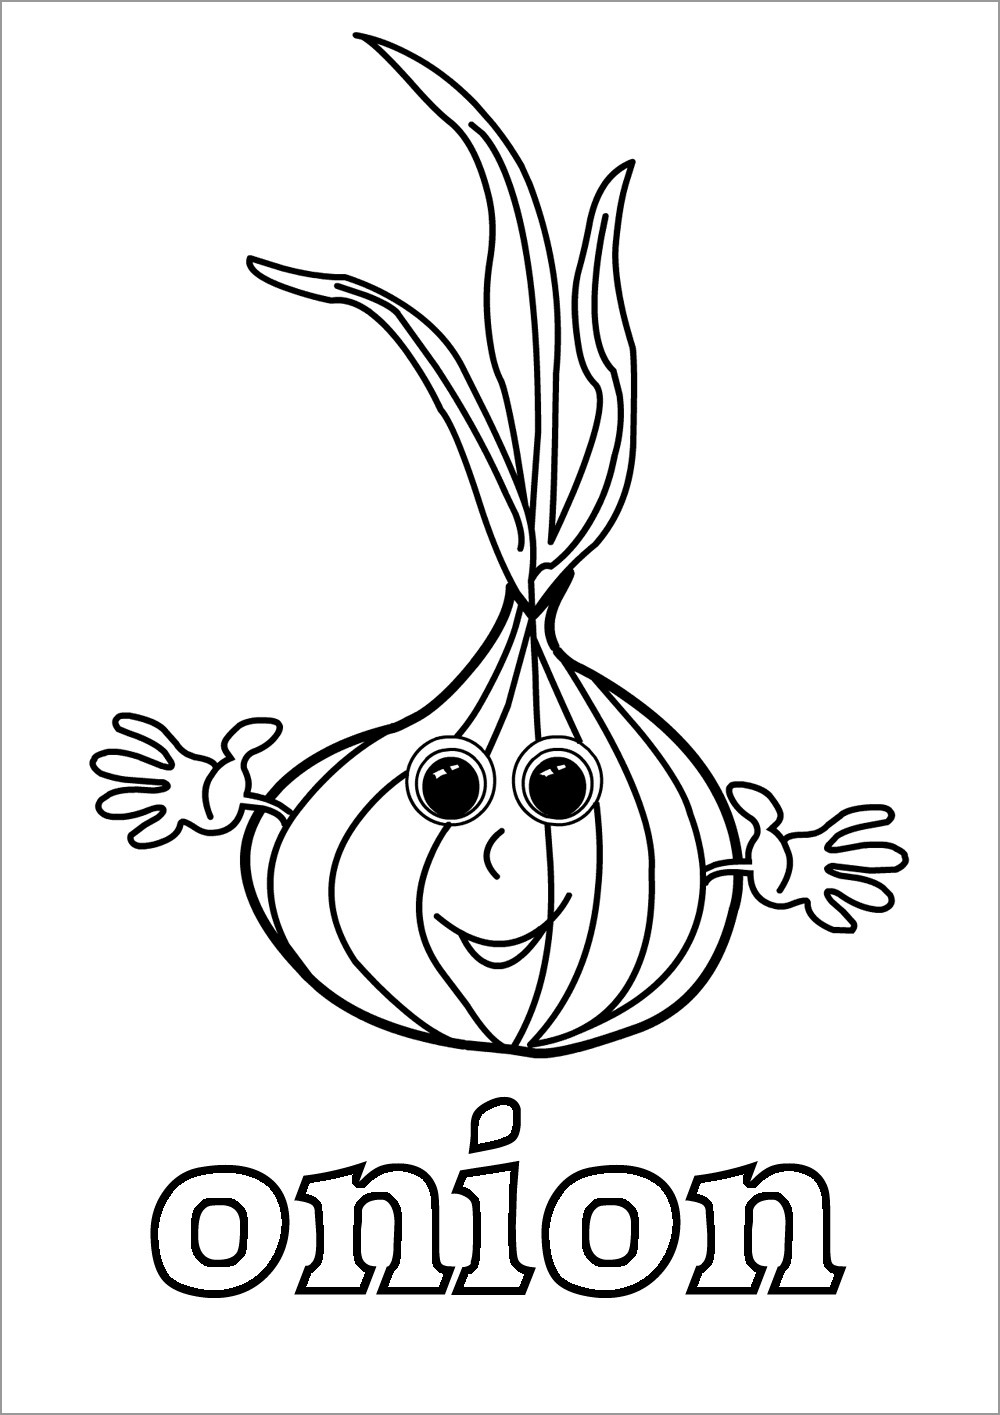 Onion Picture For Kids из архива, новые эстетичные фотки